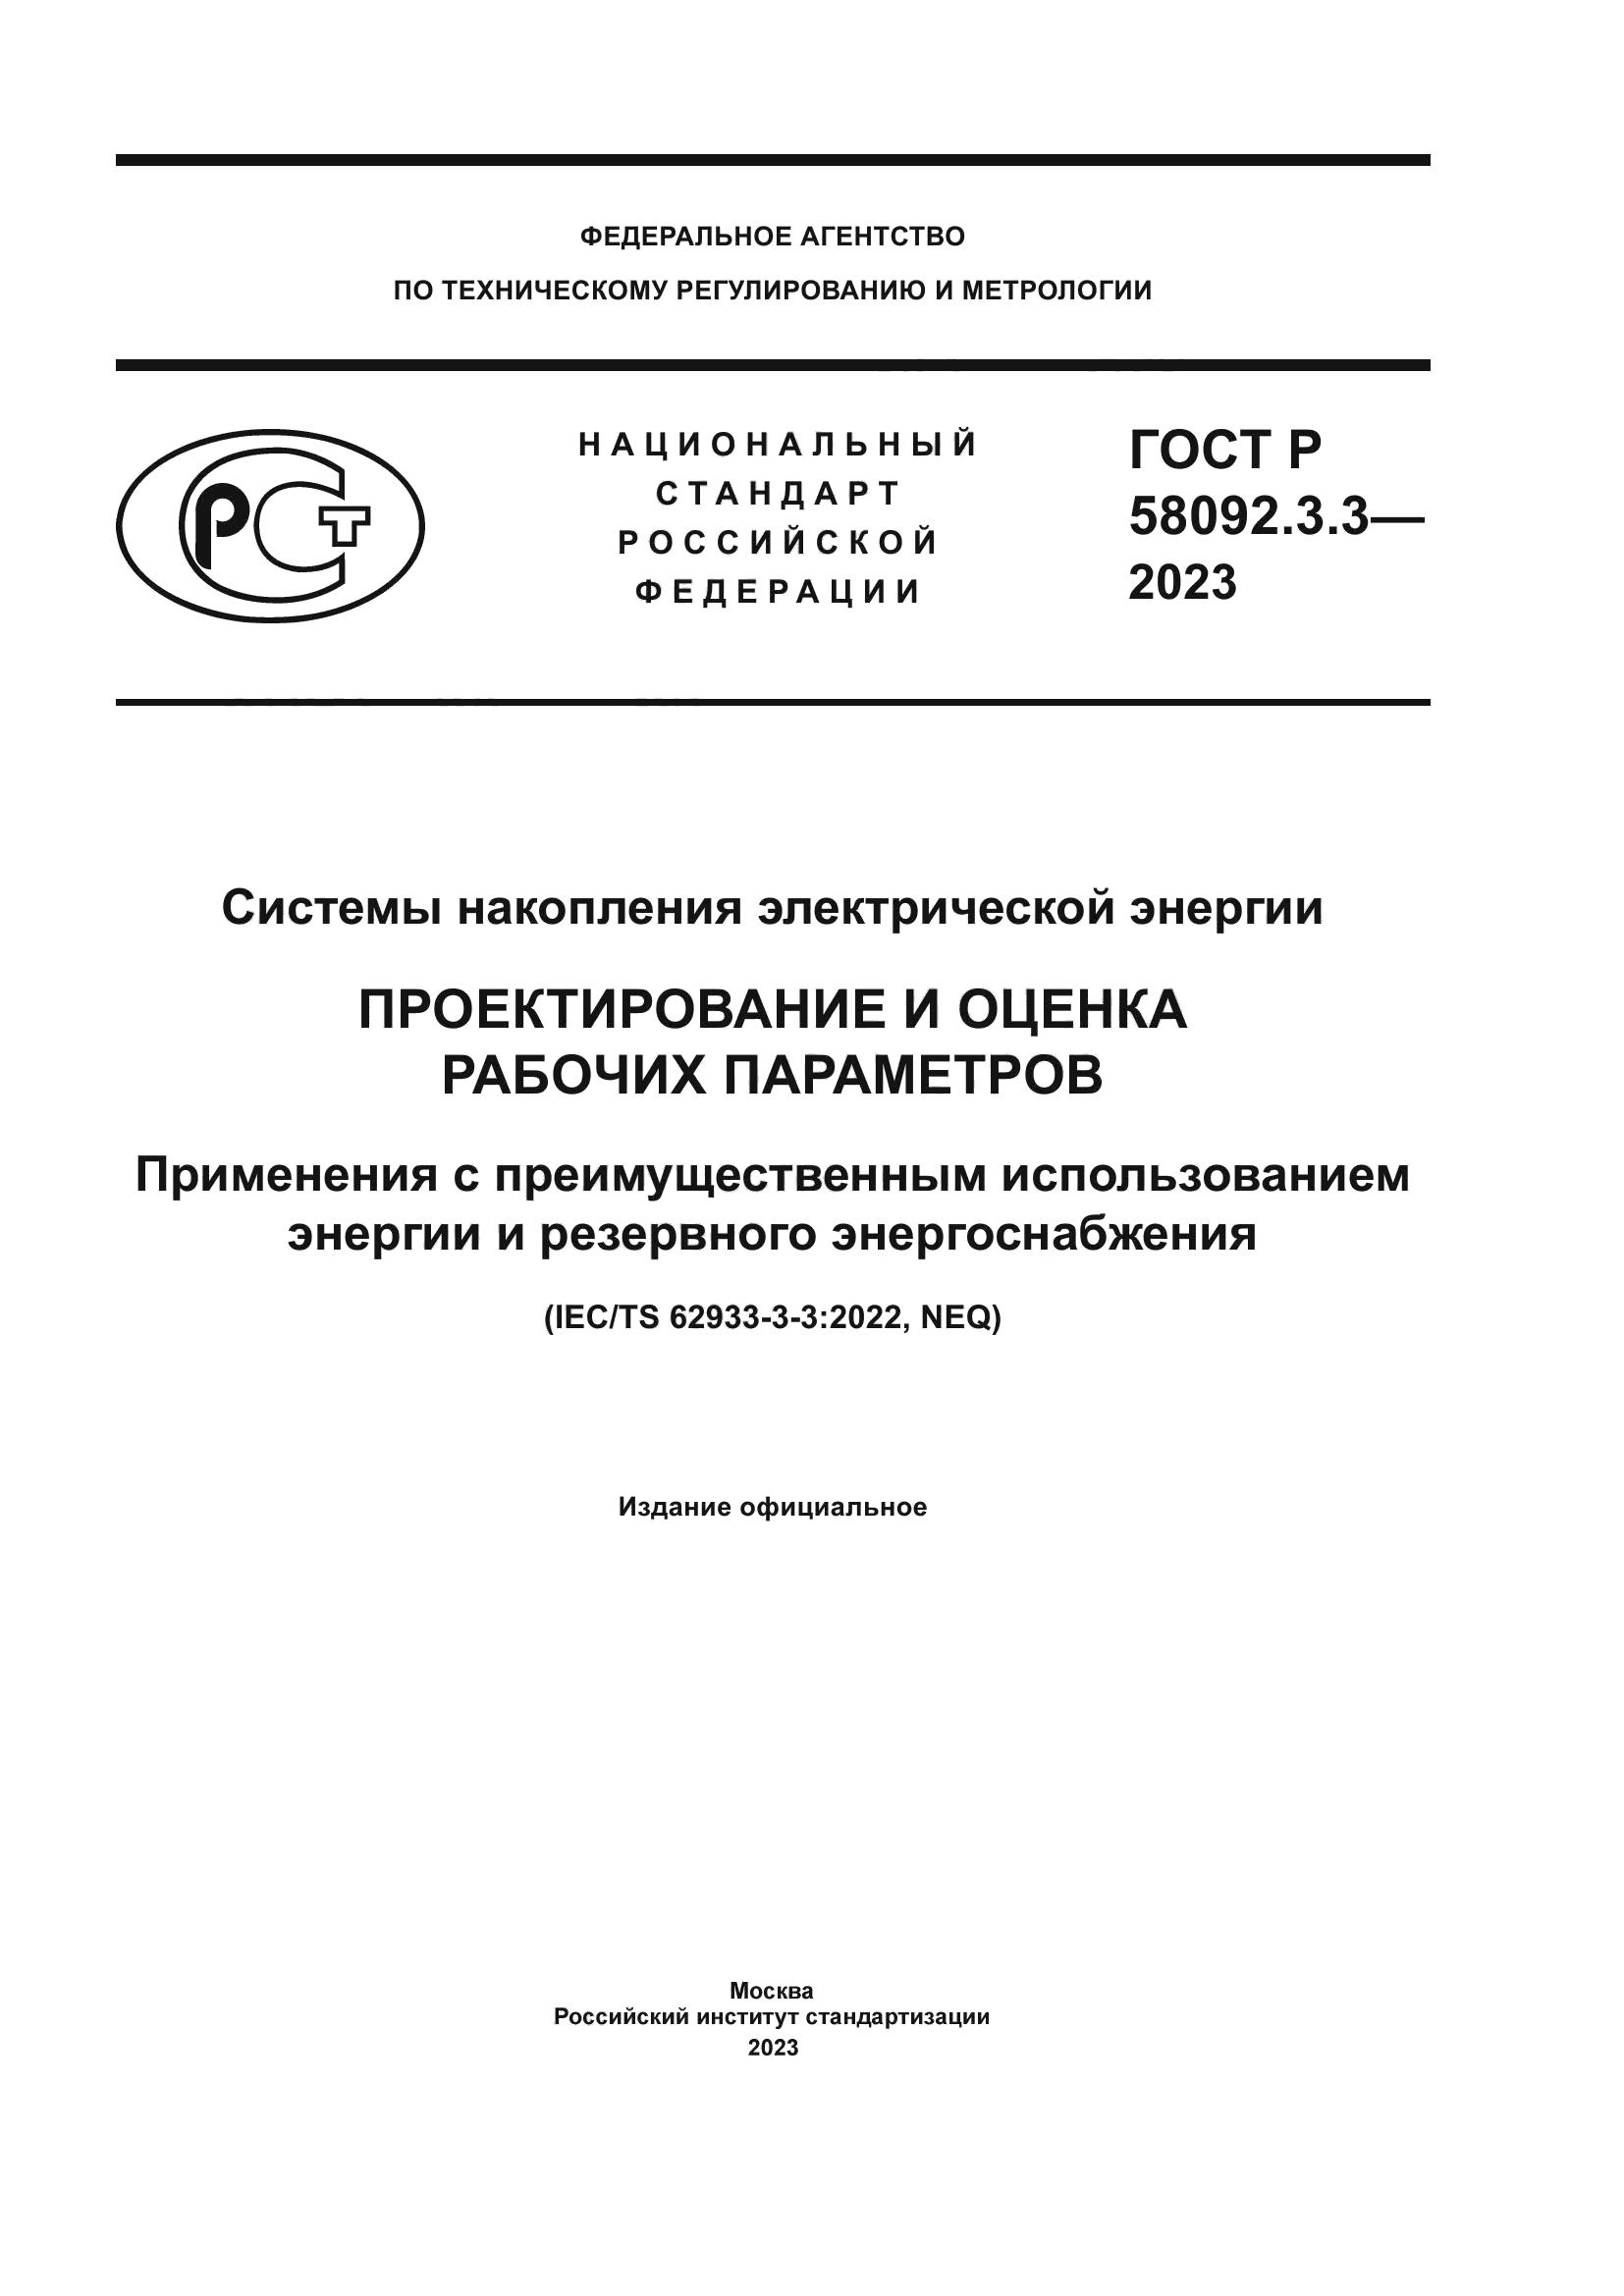 ГОСТ Р 58092.3.3-2023